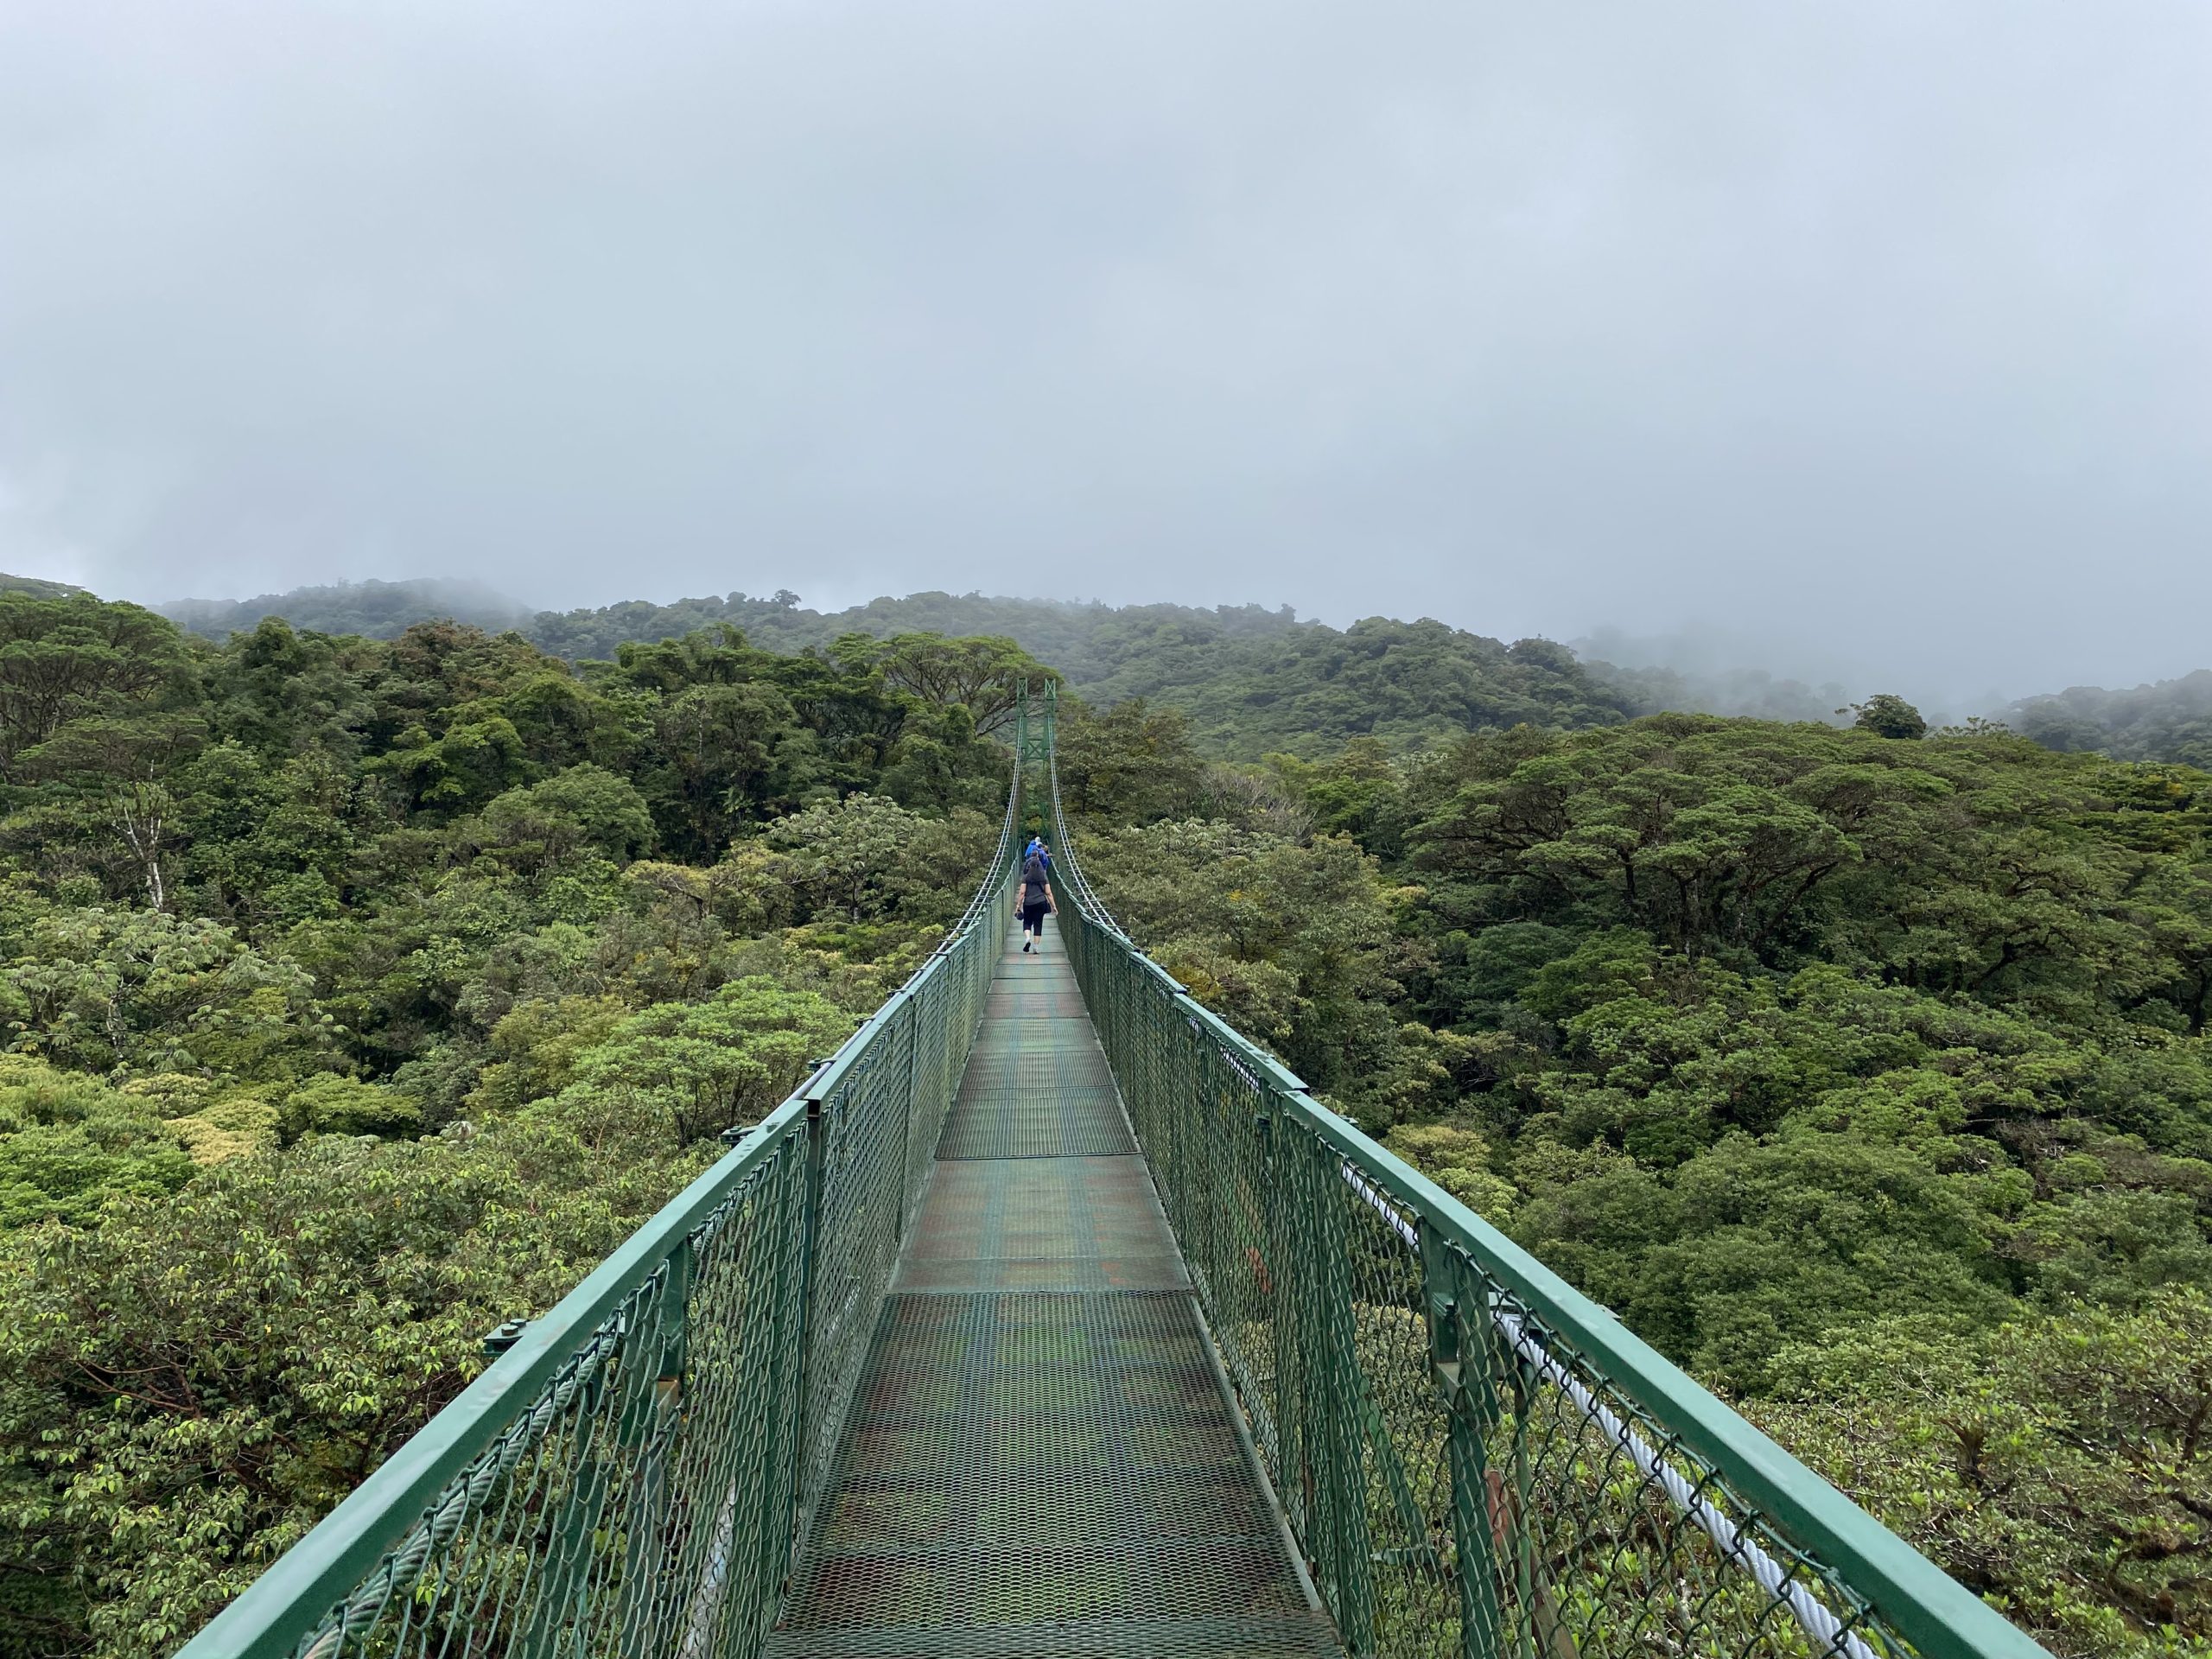 Monteverde Cloud Forest in Costa Rica